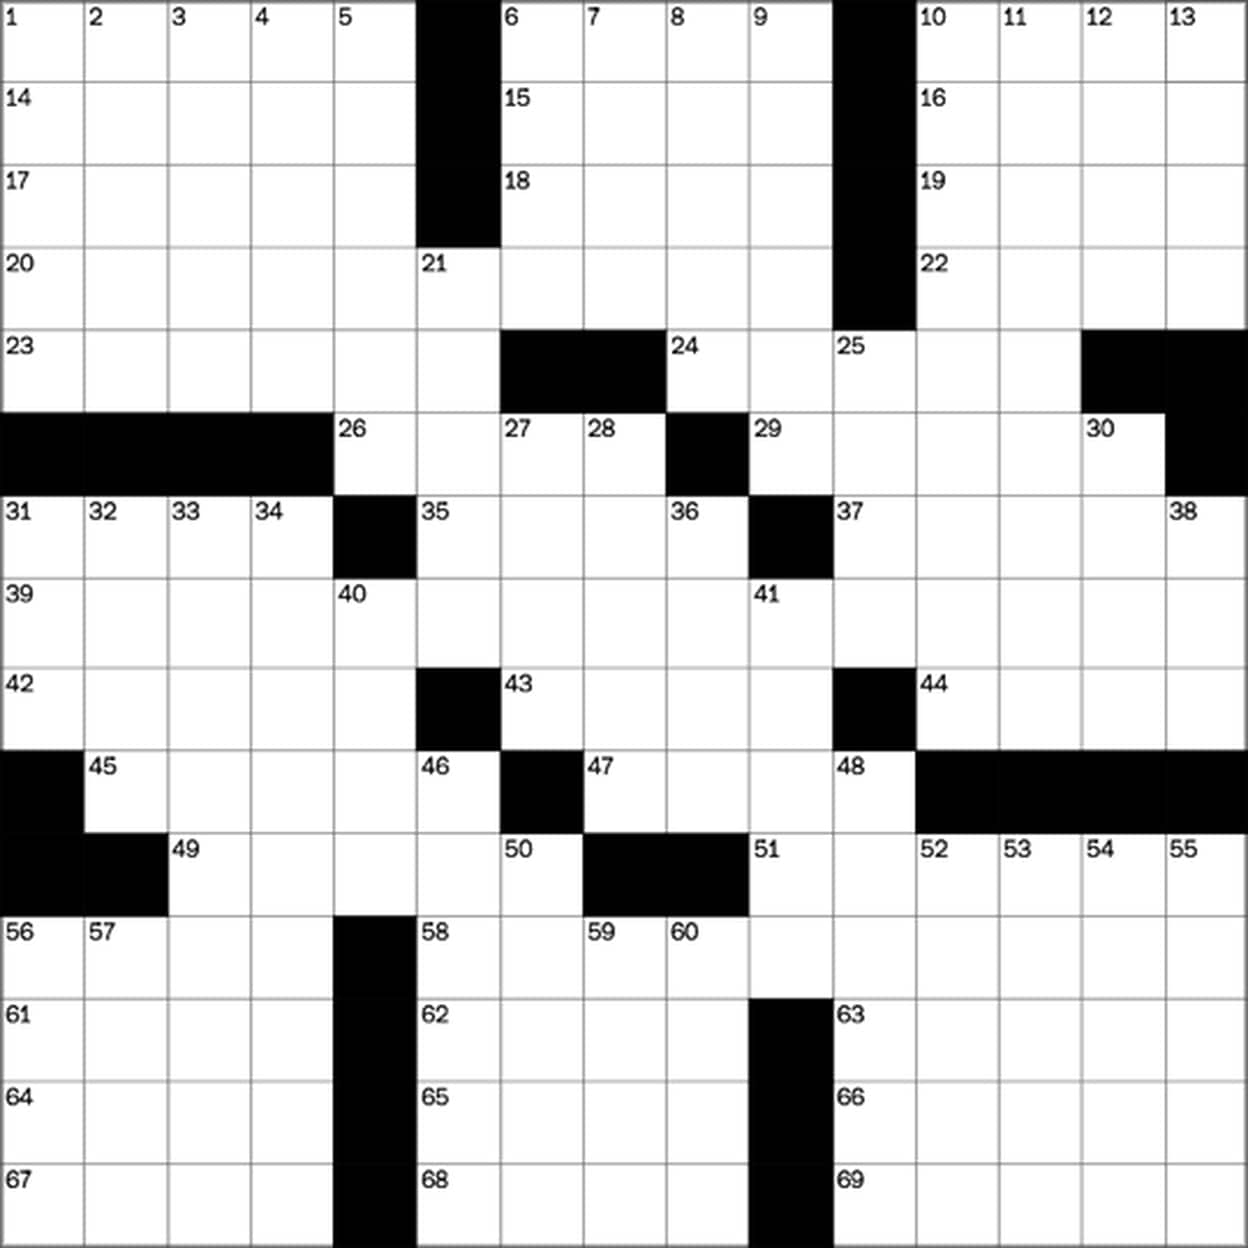 free daily crossword puzzles washington post